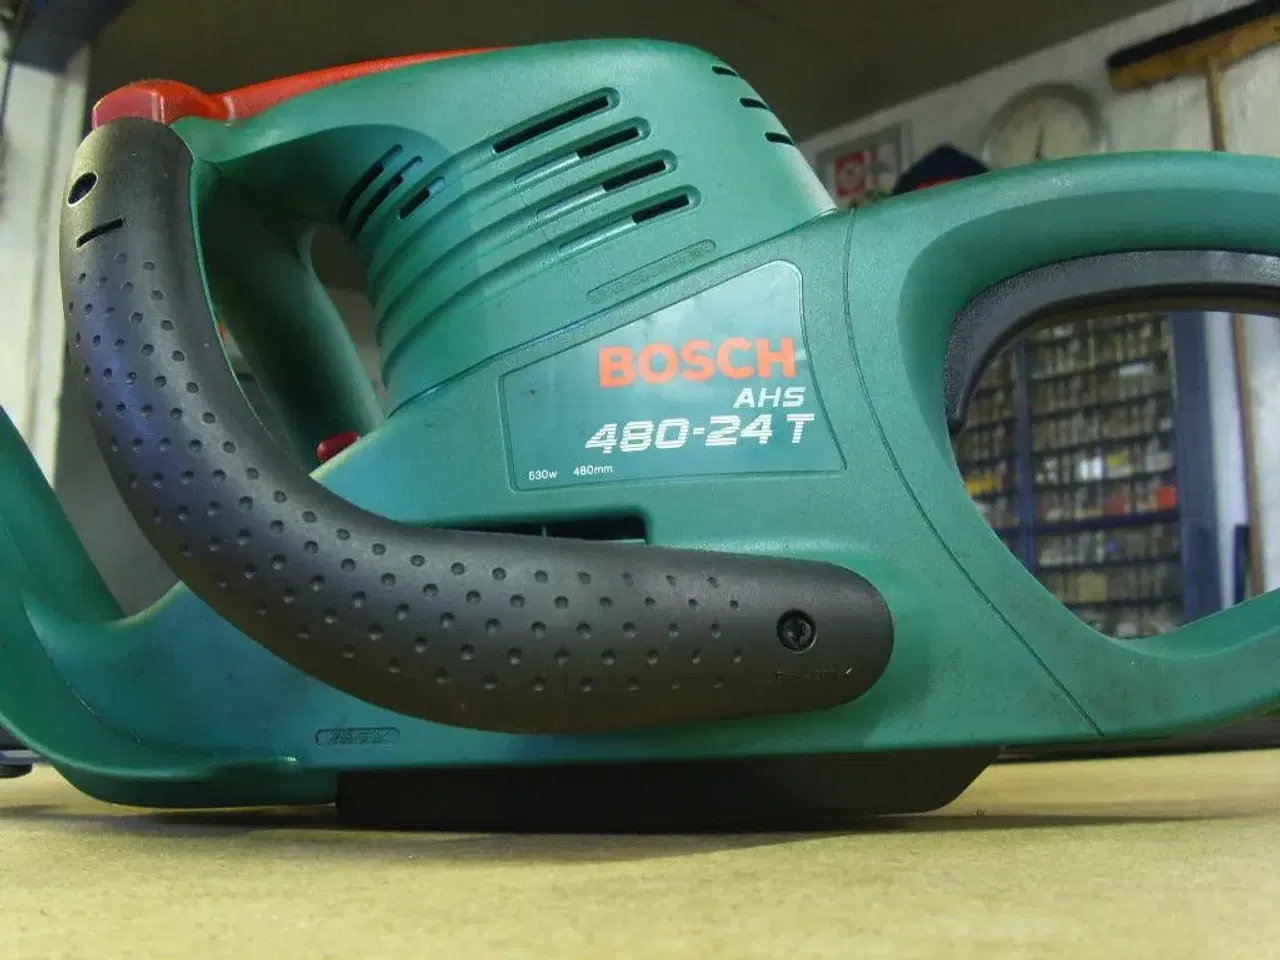 Billede 4 - Bosch 480-24T hækkeklipper